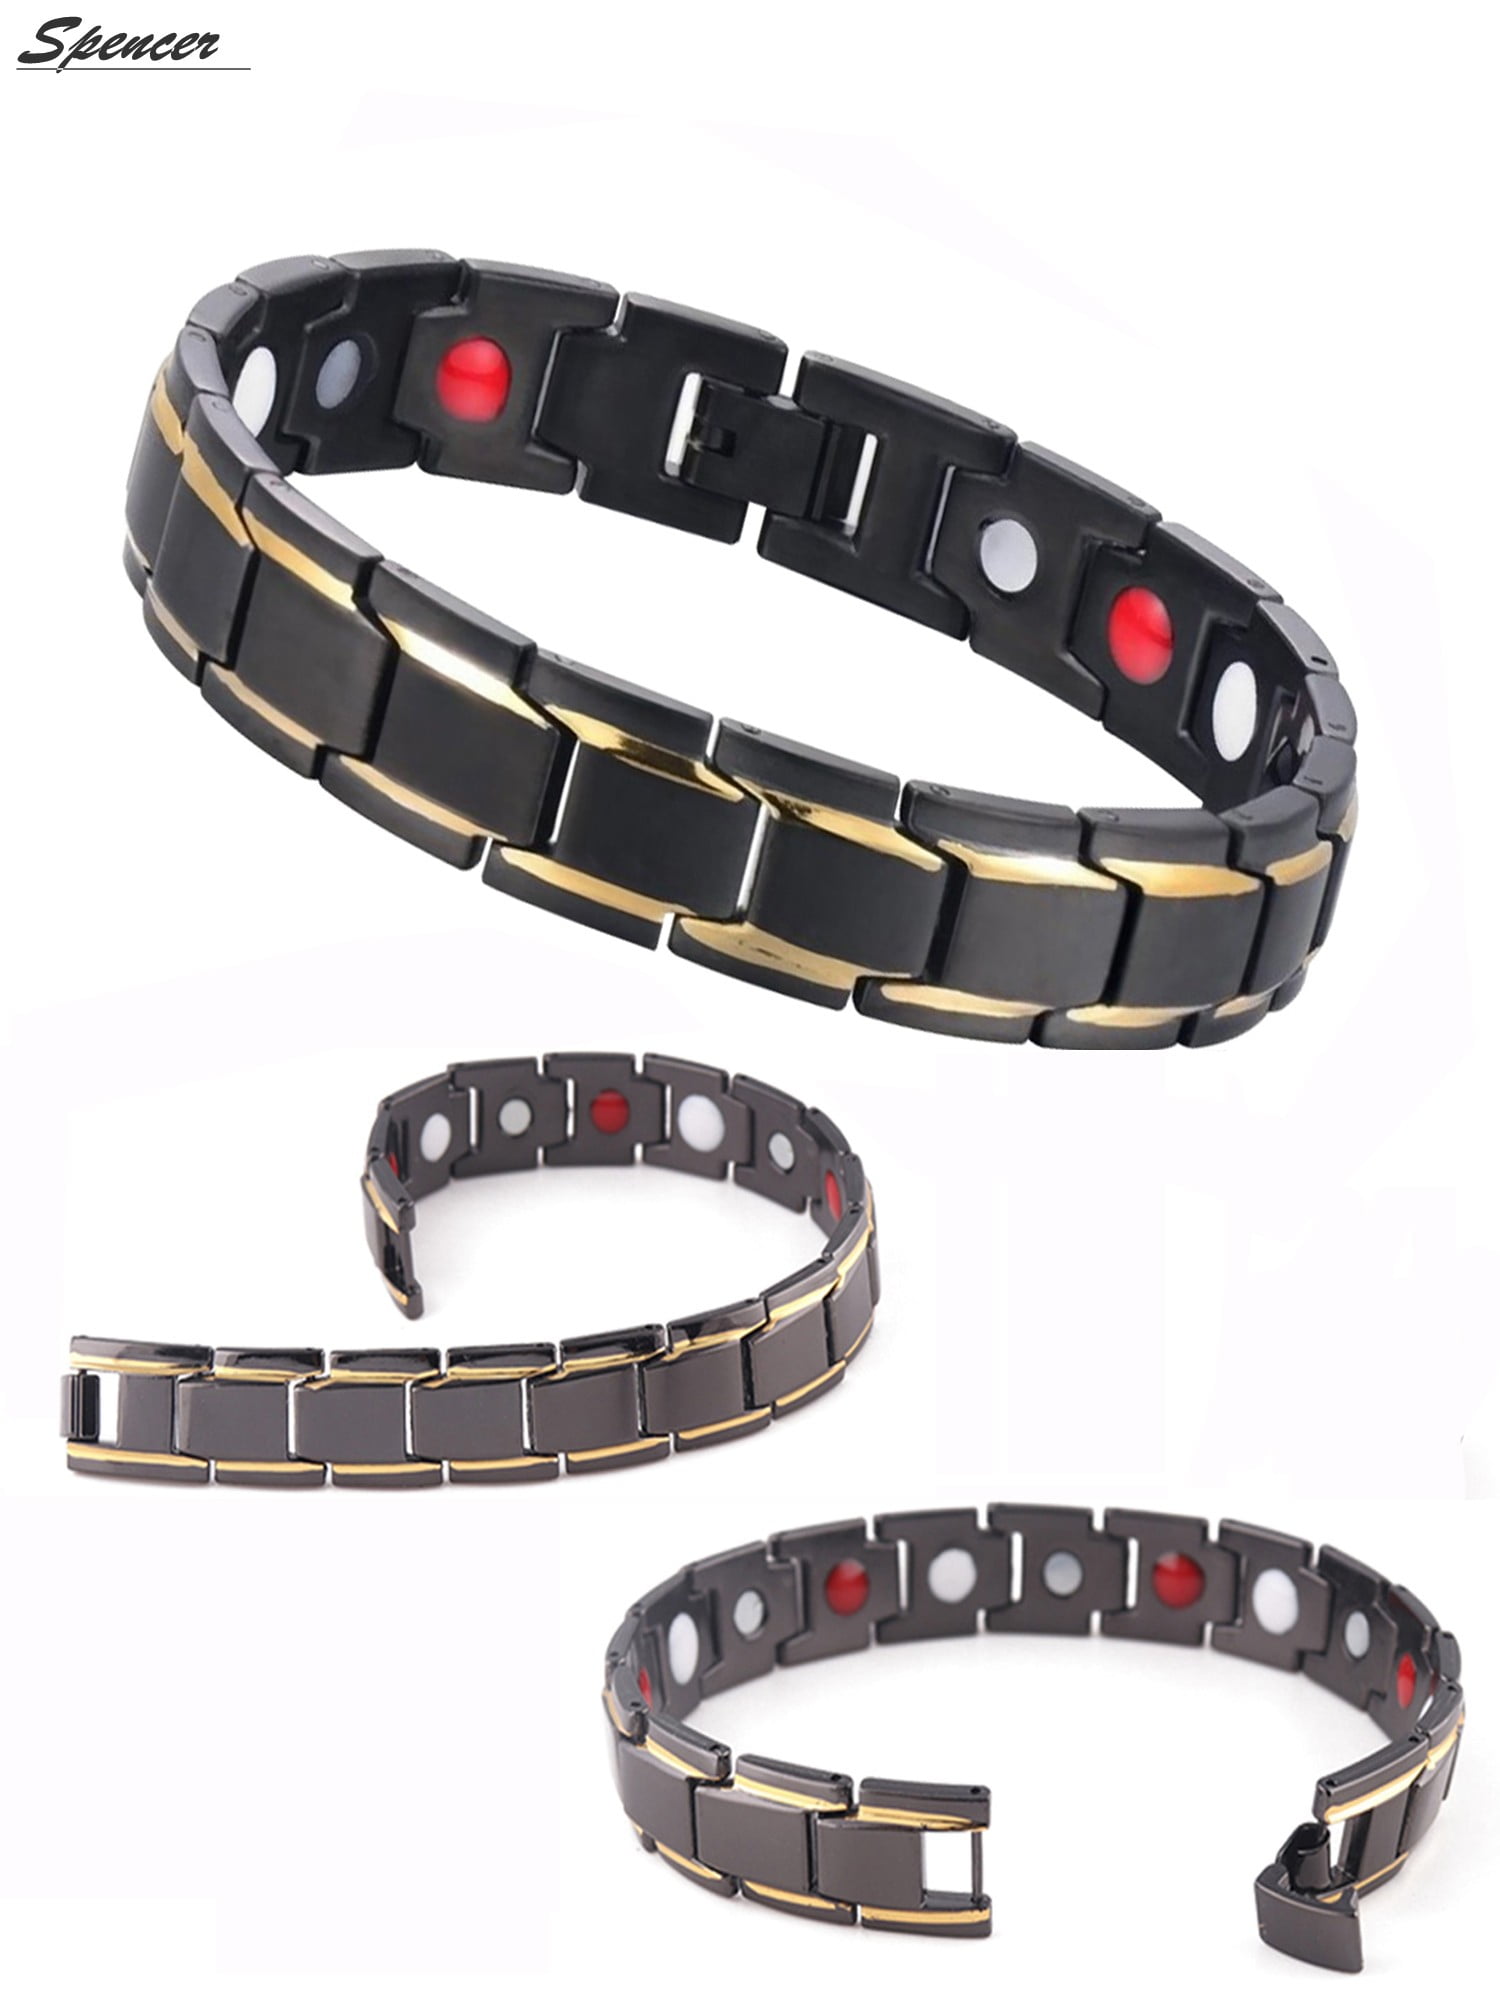 👇👇👇New Prices👇👇👇... - NoProblem ion bracelet in Qatar | Facebook